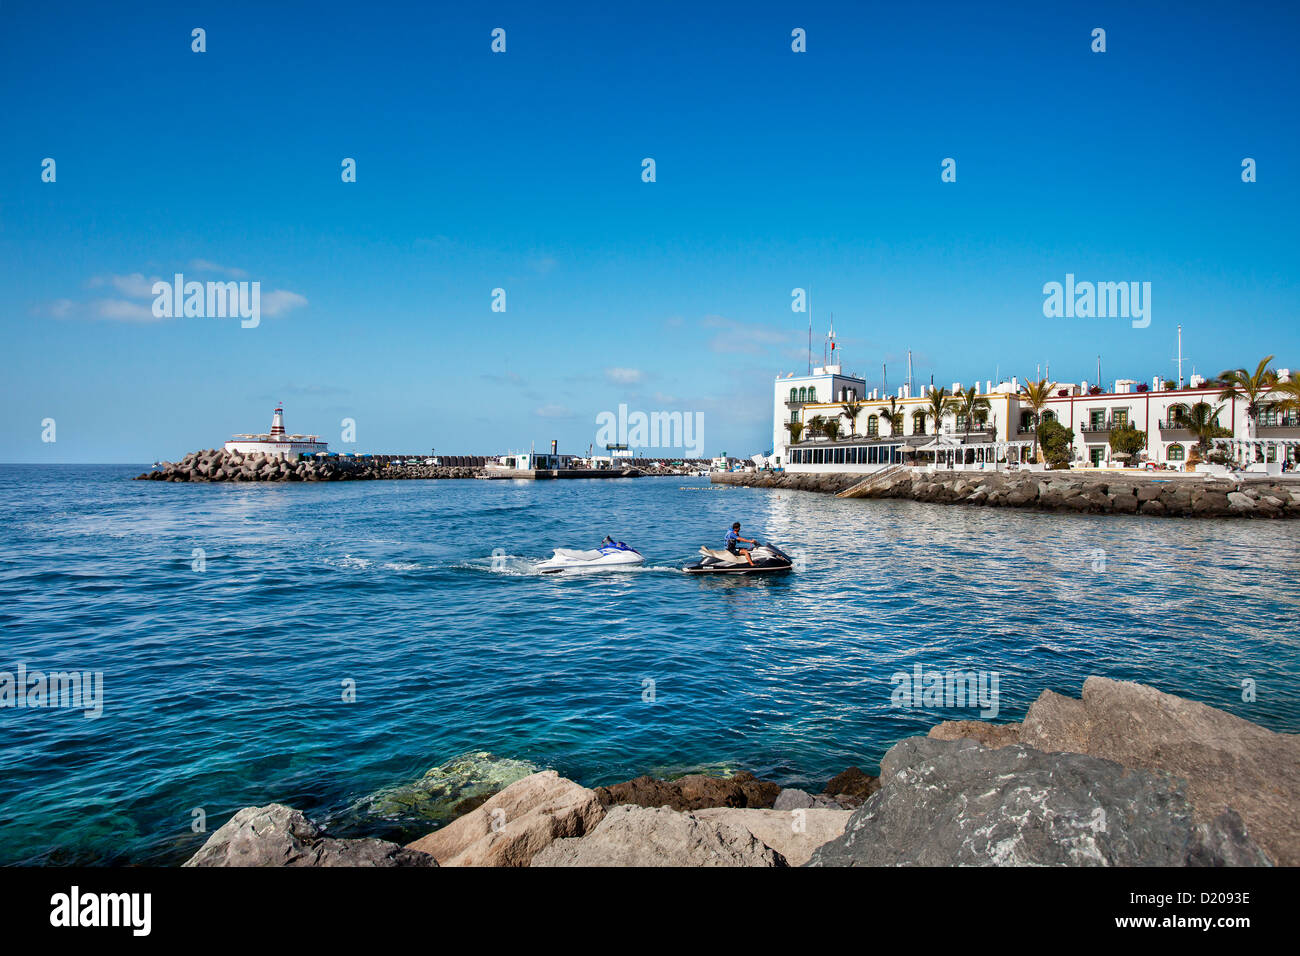 View of the seaport Puerto de Mogan, Gran Canaria, Canary Islands, Spain, Europe Stock Photo